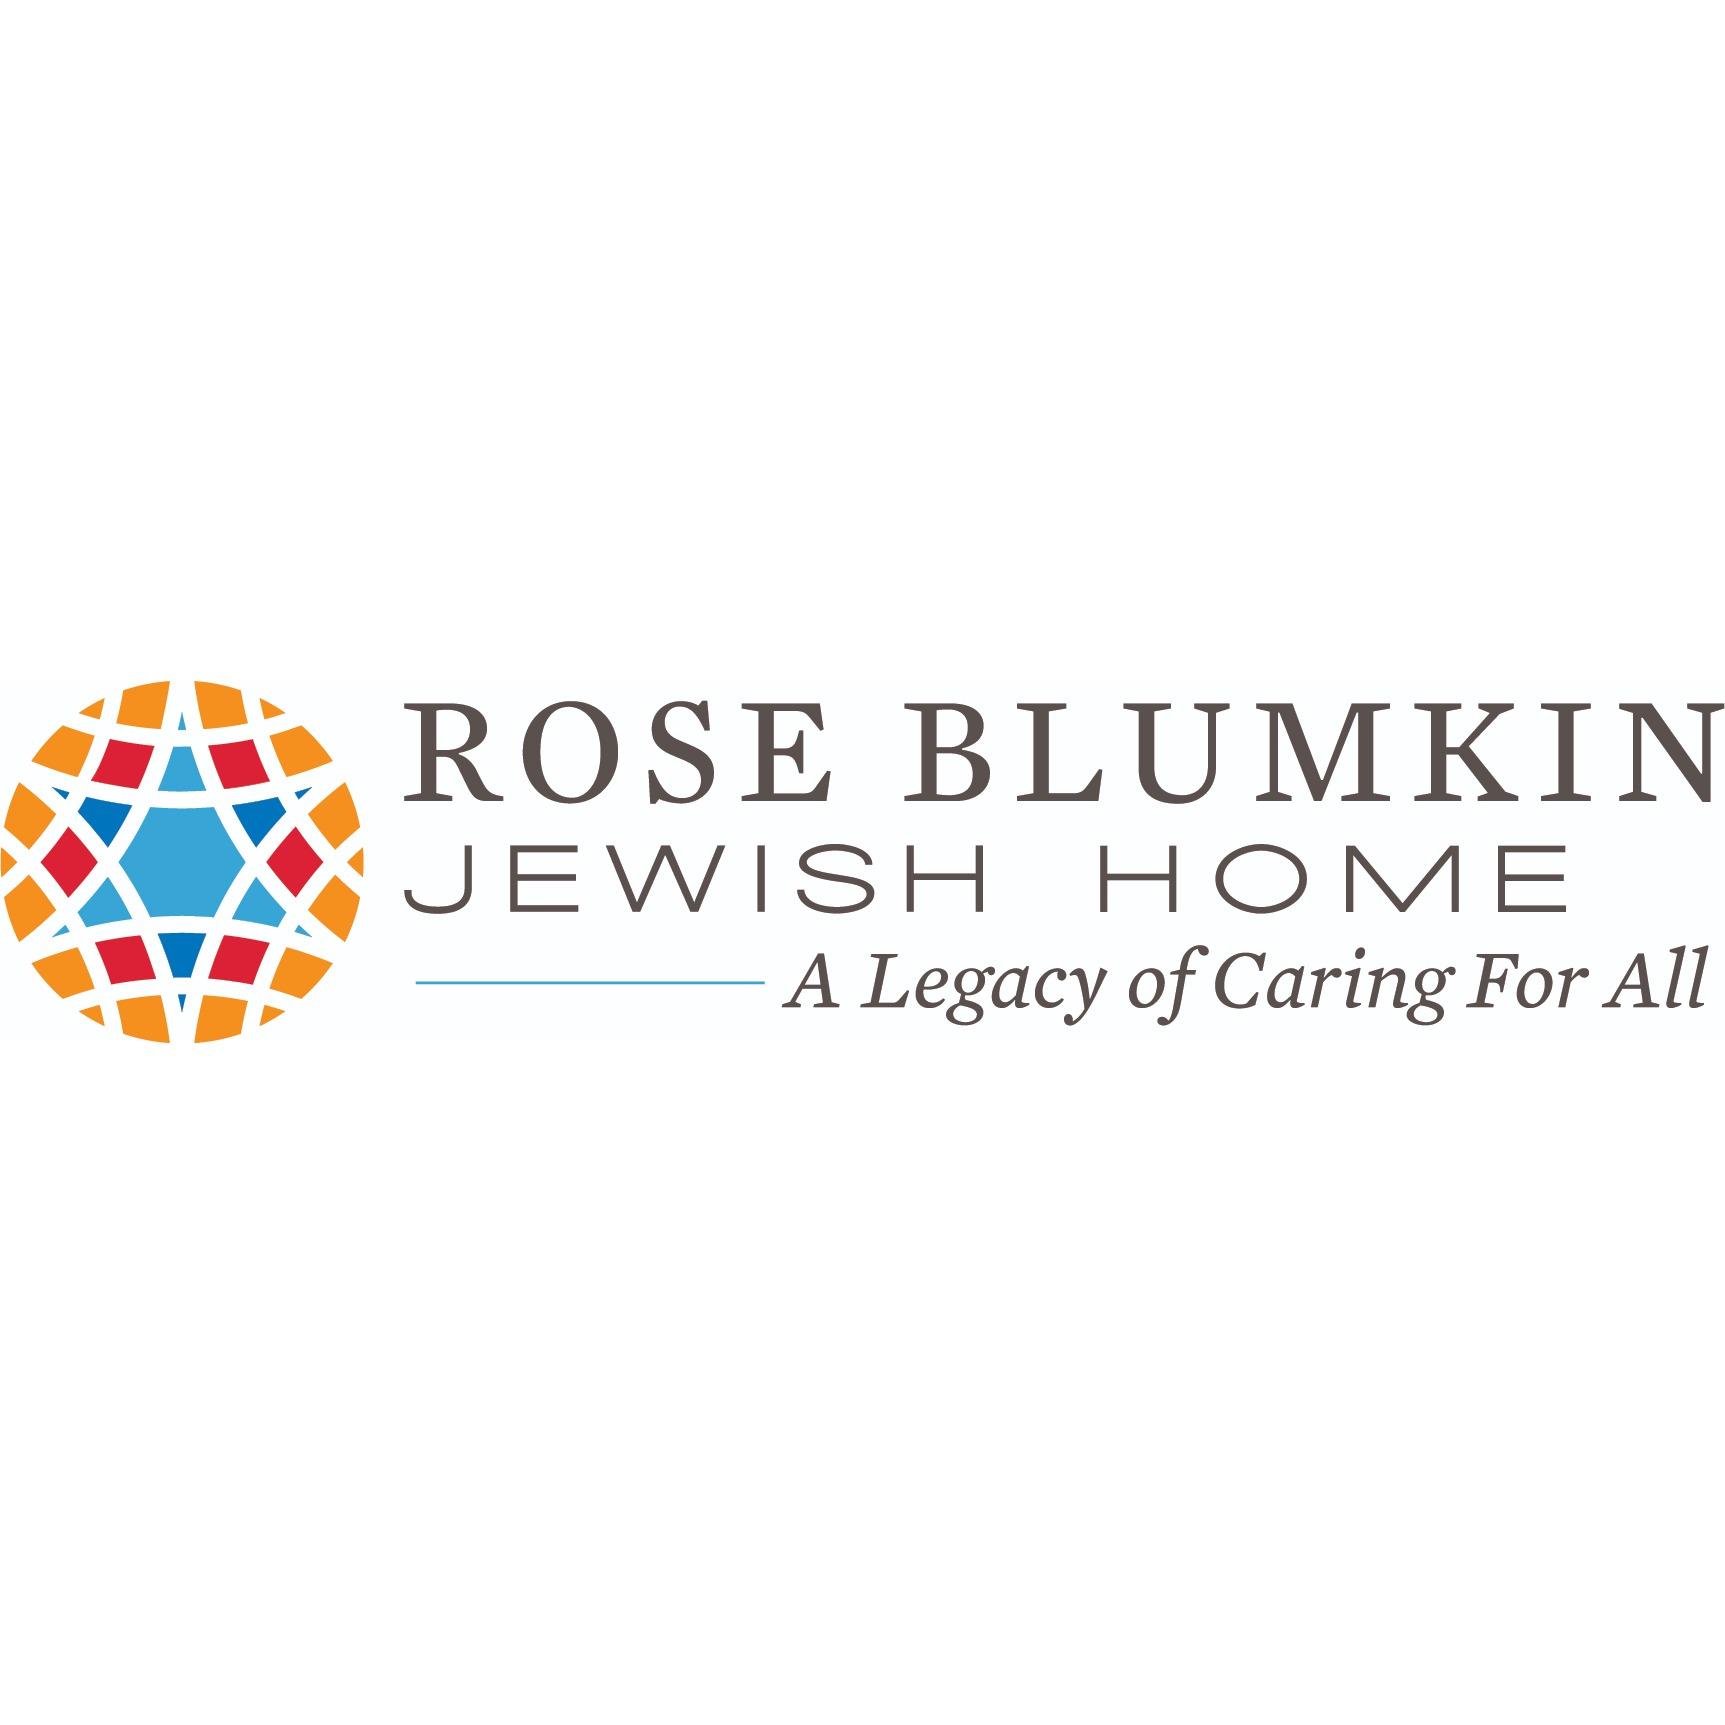 Rose Blumkin Jewish Home Logo